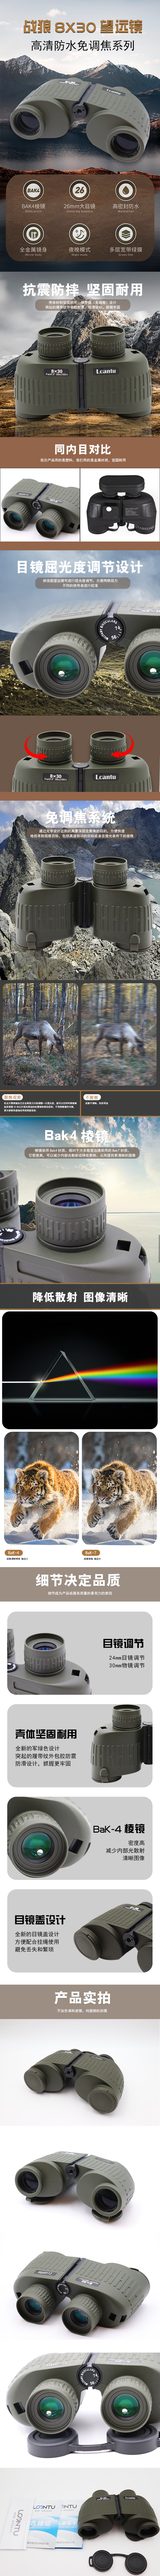 Lcantu徕佳图战狼8x30望远镜高清防水免调焦系列.jpg